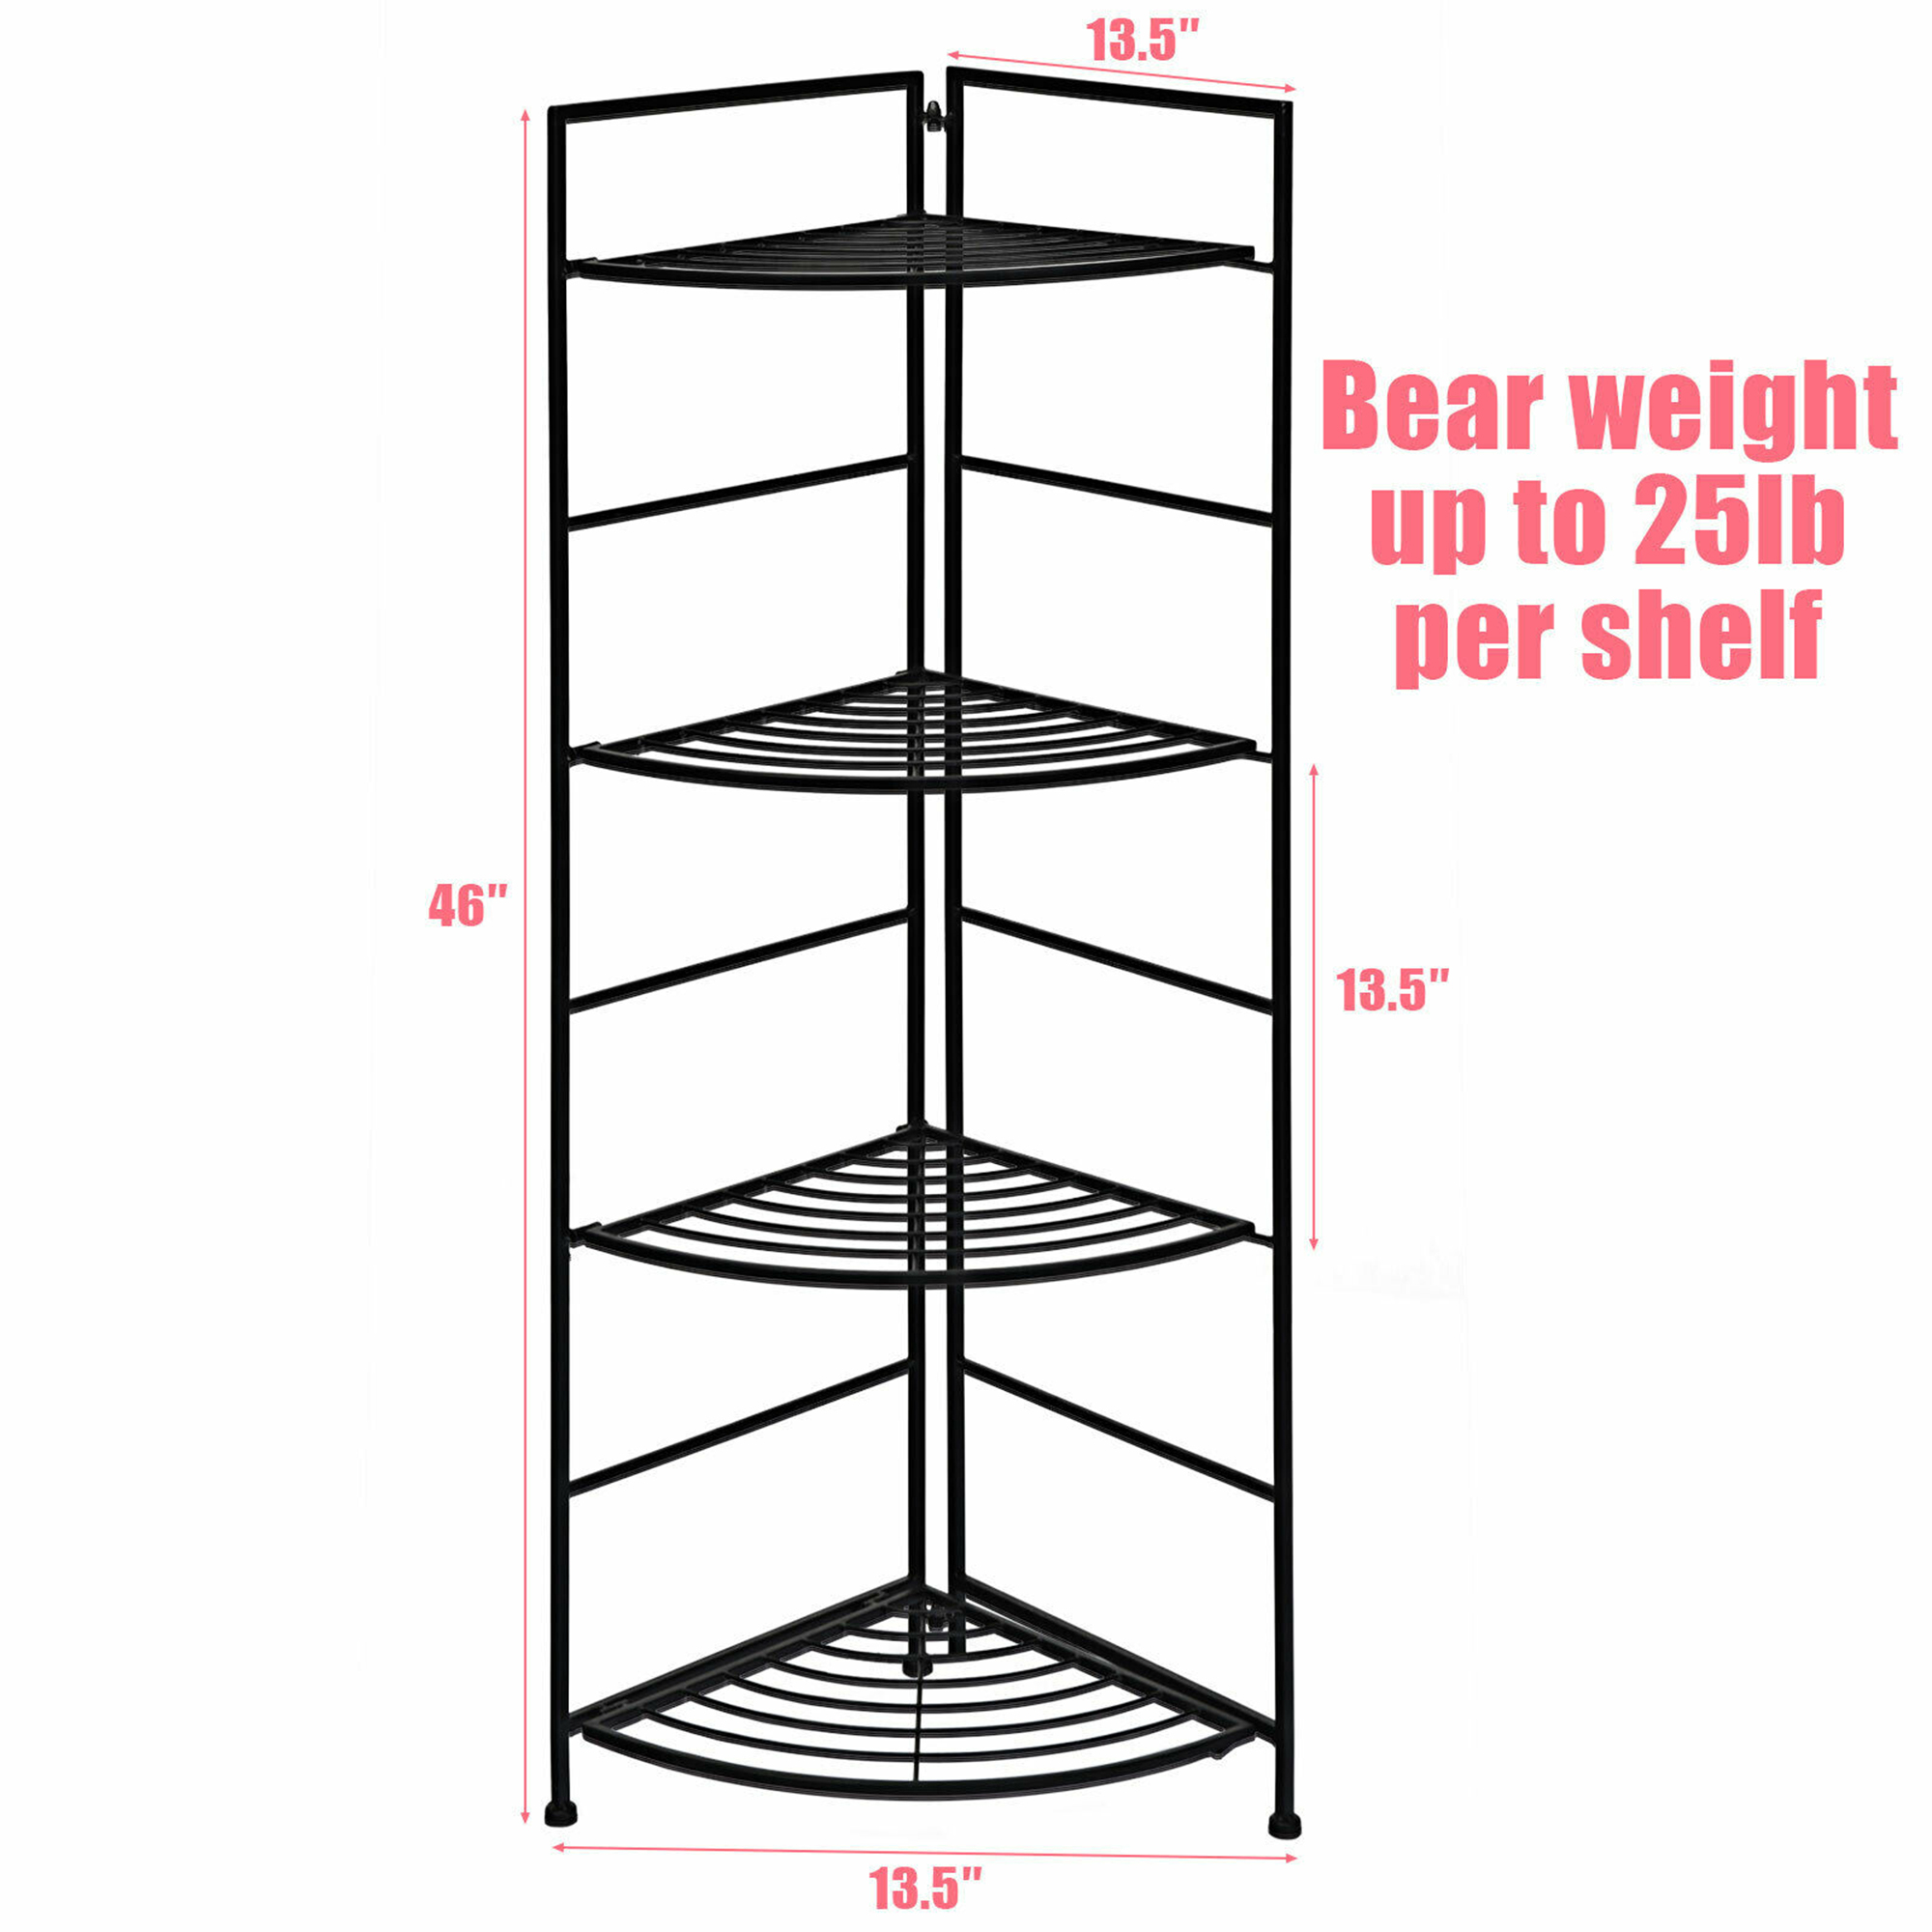 Gymax 4 Tier Folding Metal Shelf Plant, Folding Metal Shelves